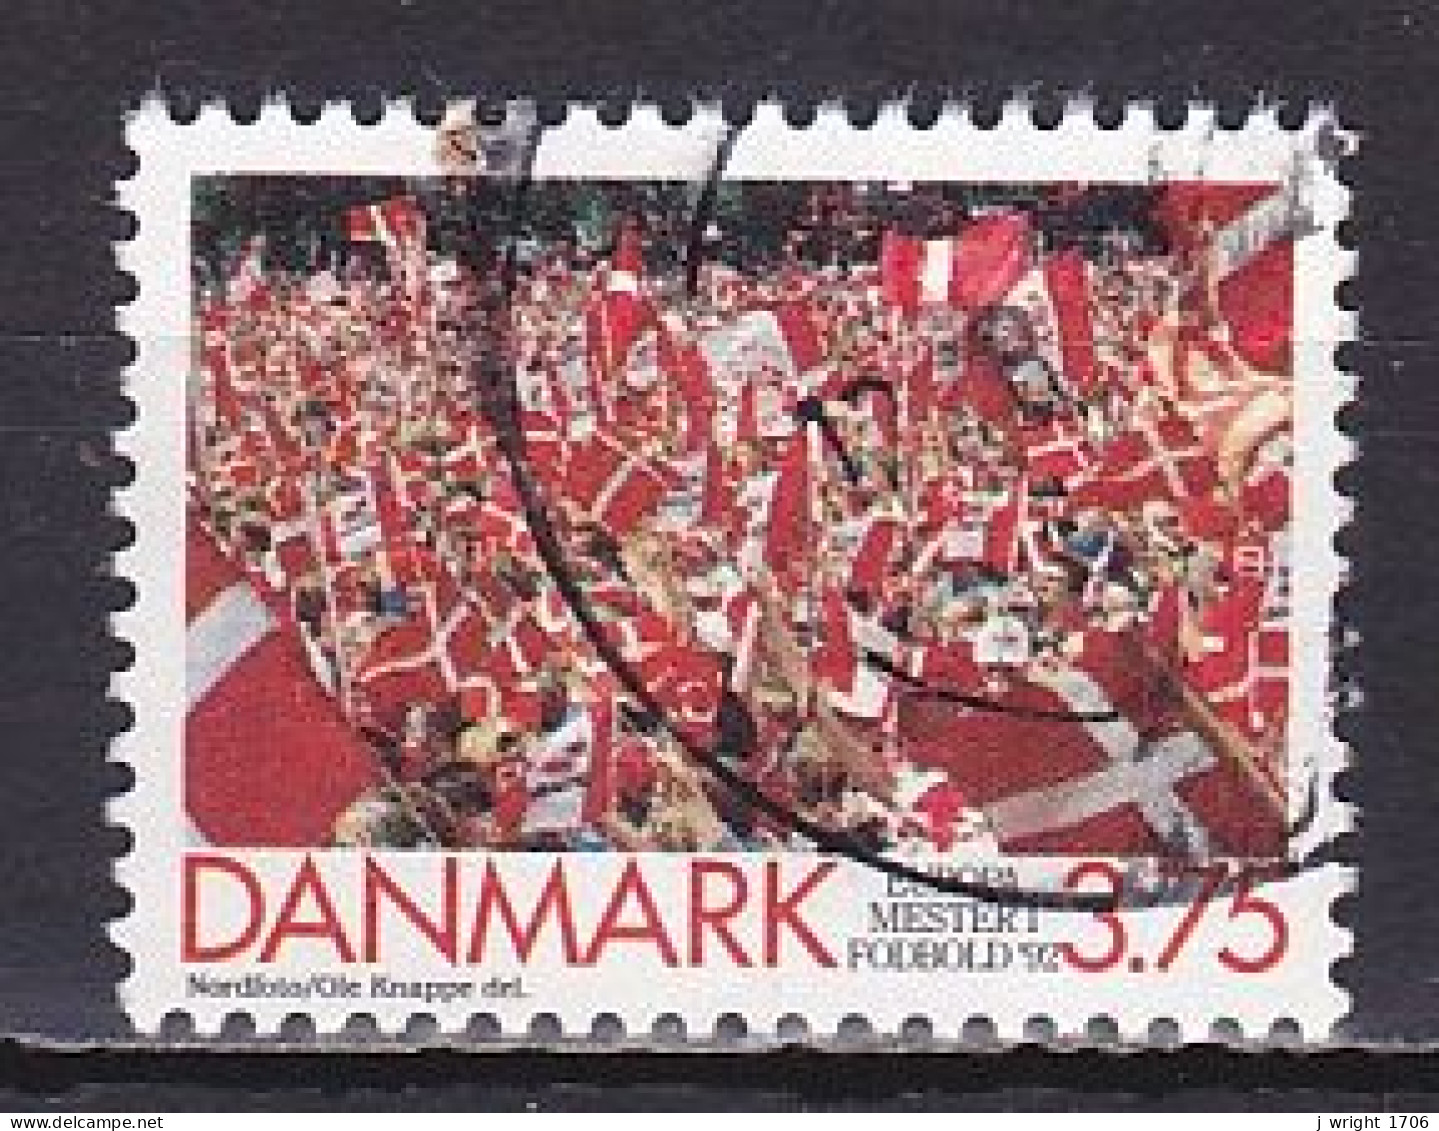 Denmark, 1992, Demark European Football Champions, 3.75kr, USED - Usado